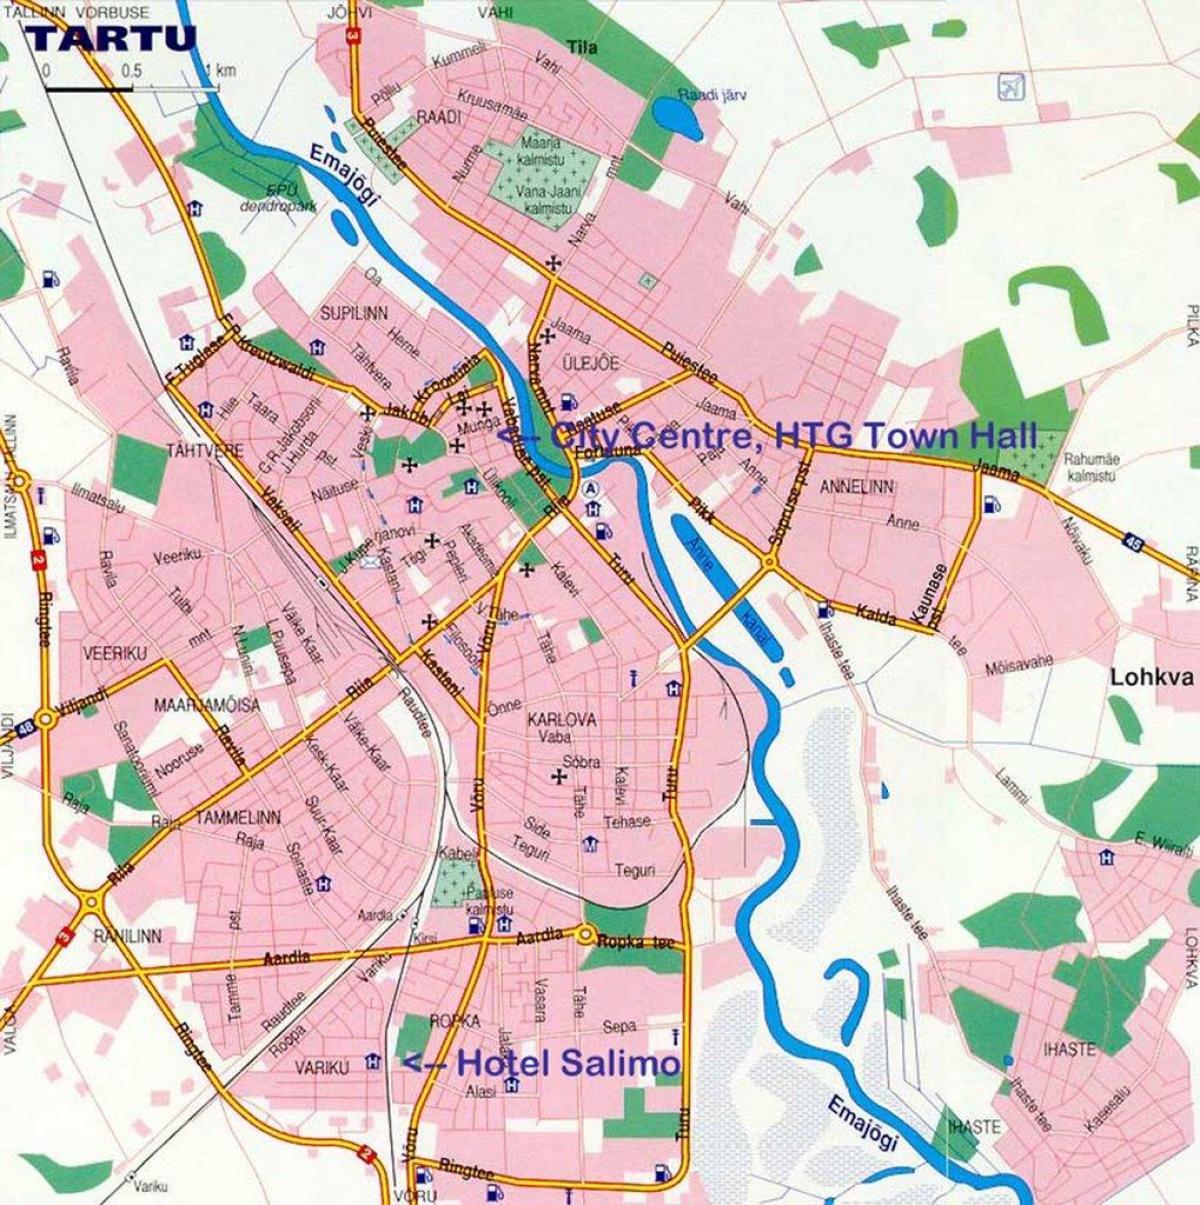 kort over tartu i Estland